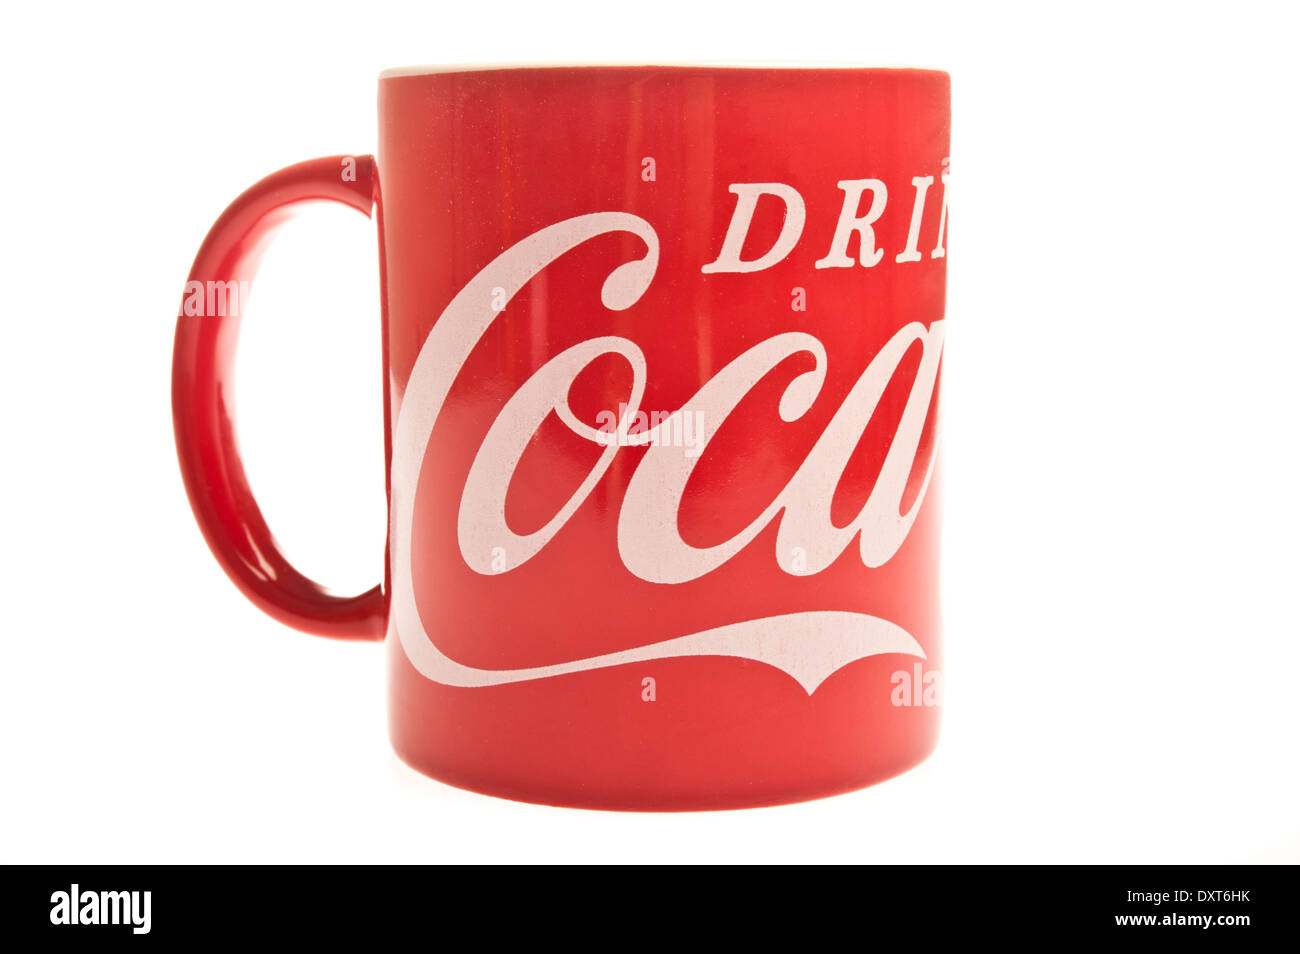 https://c8.alamy.com/comp/DXT6HK/coca-cola-mug-DXT6HK.jpg